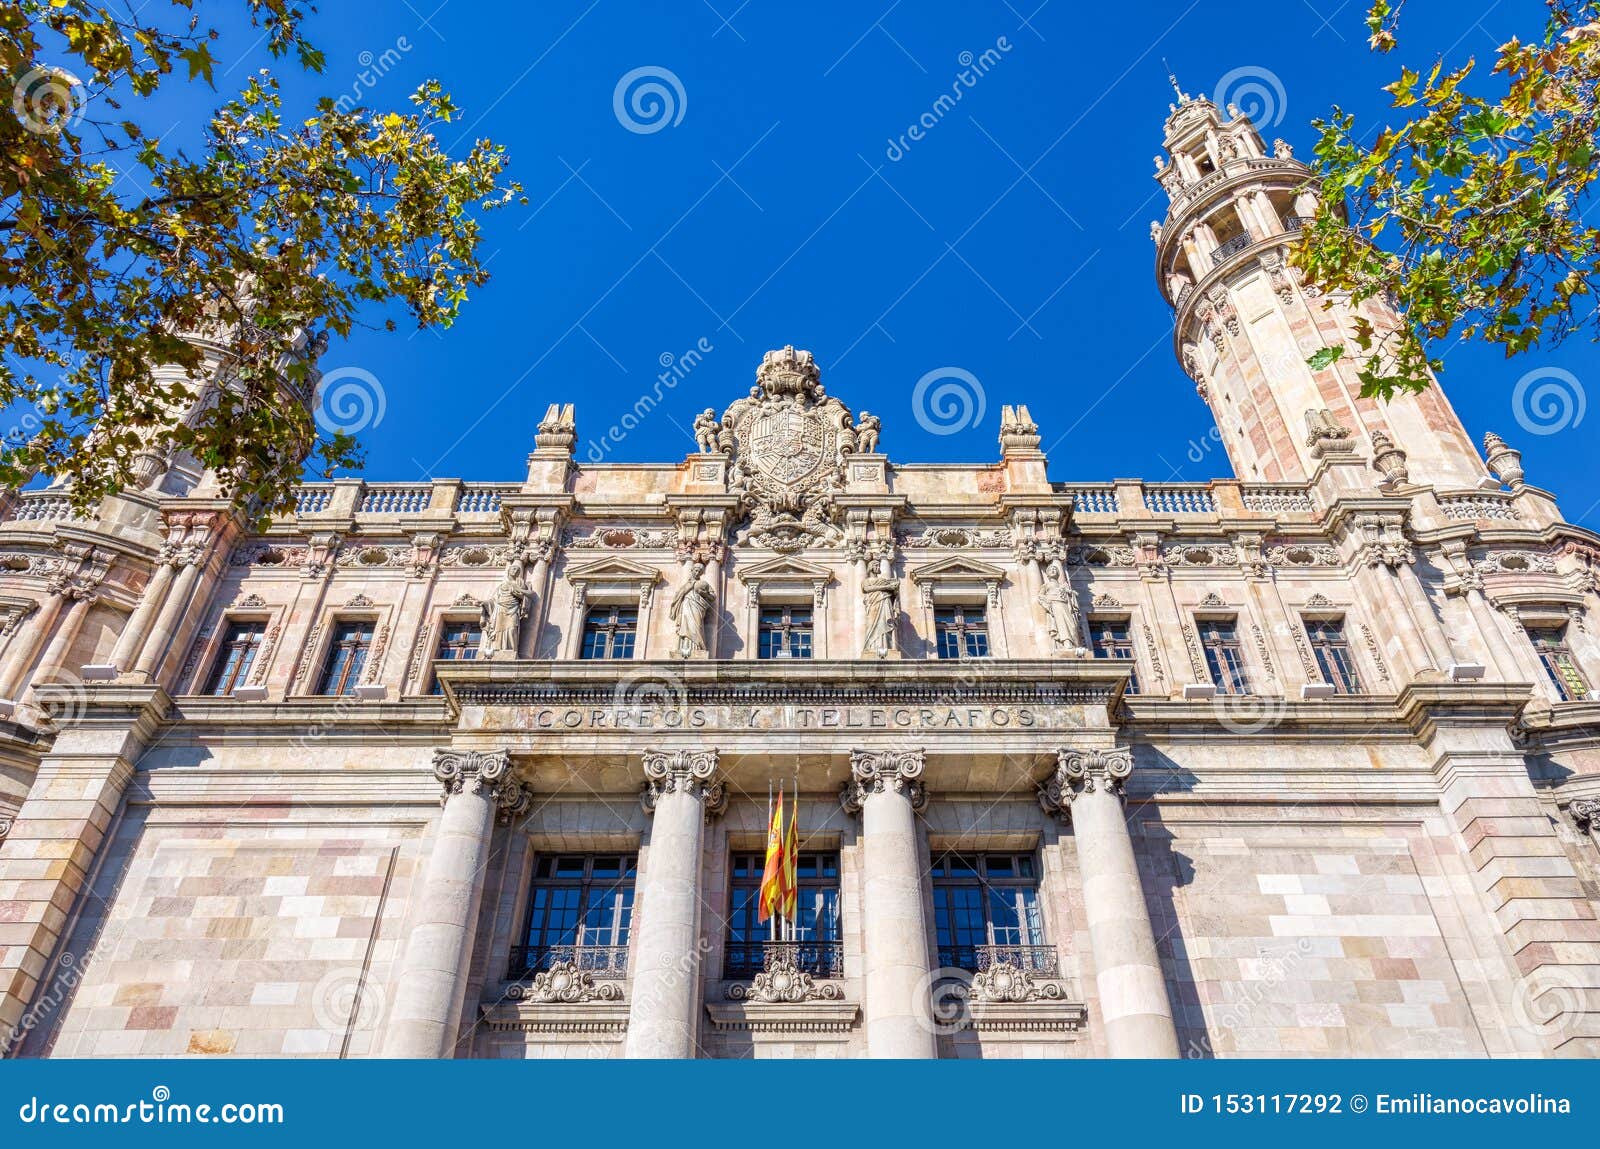 palace correos y telegrafos, main entrance. barcelona